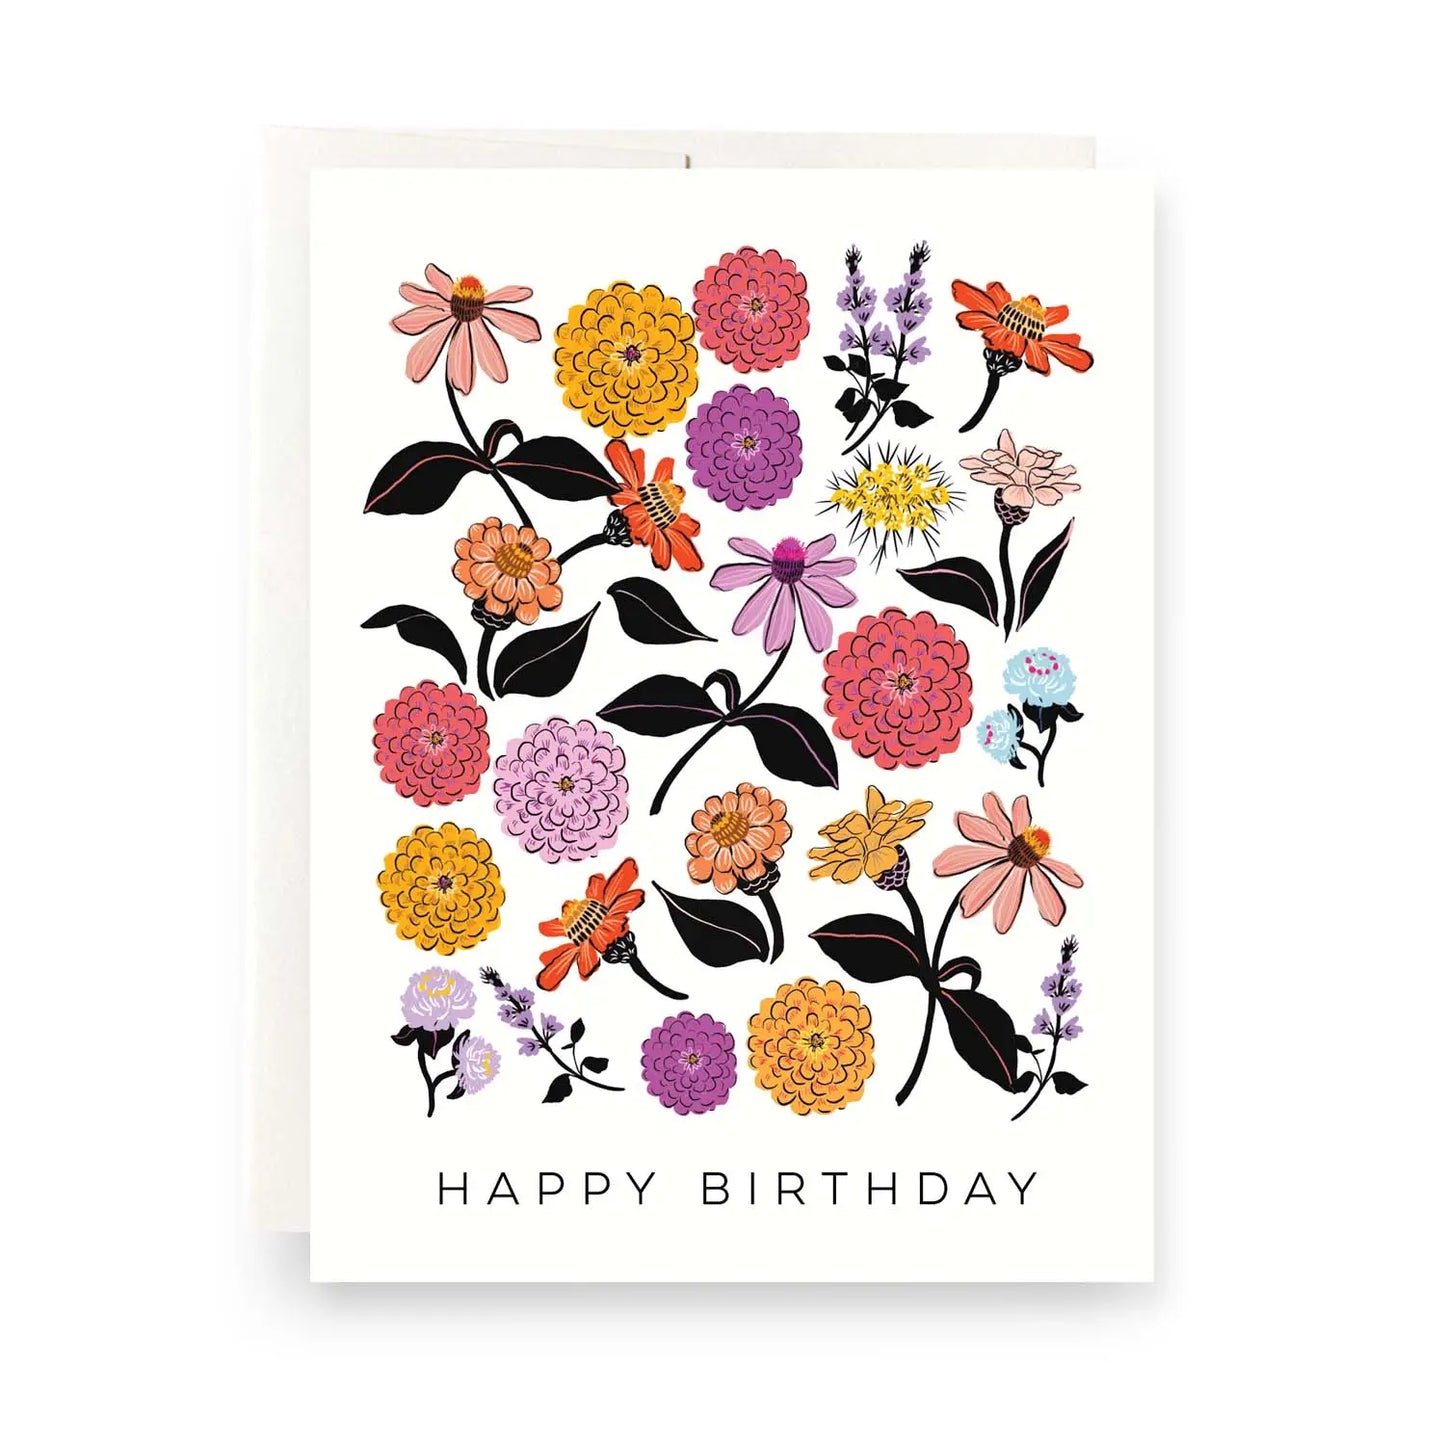 Zinnias Birthday Greeting Card - Moon Room Shop and Wellness